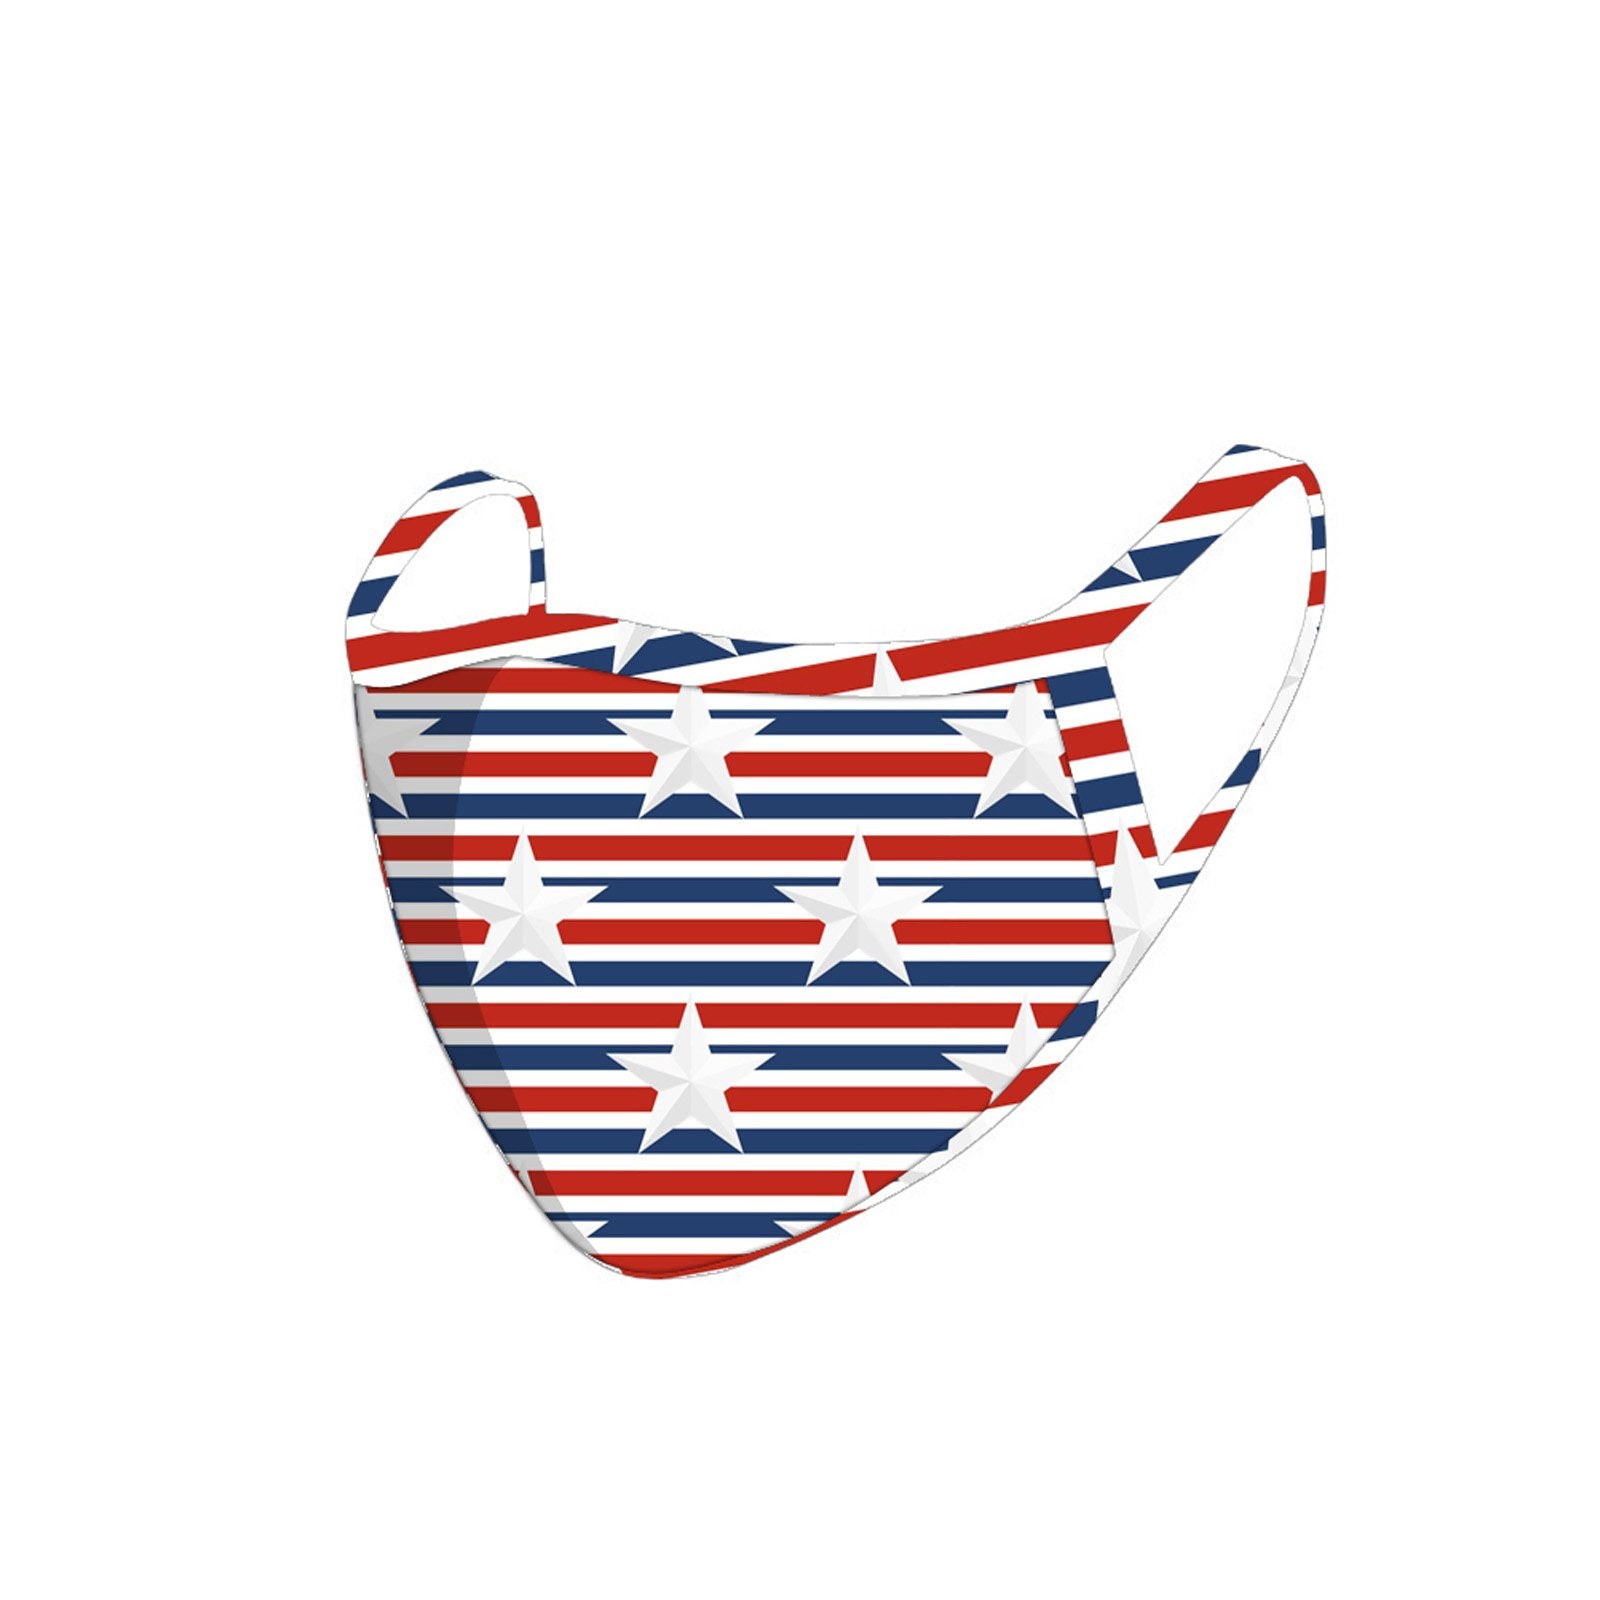 FCM-066 American Bling Stars & Stripes Print Fabric Face Mask Double Layer -1Pcs